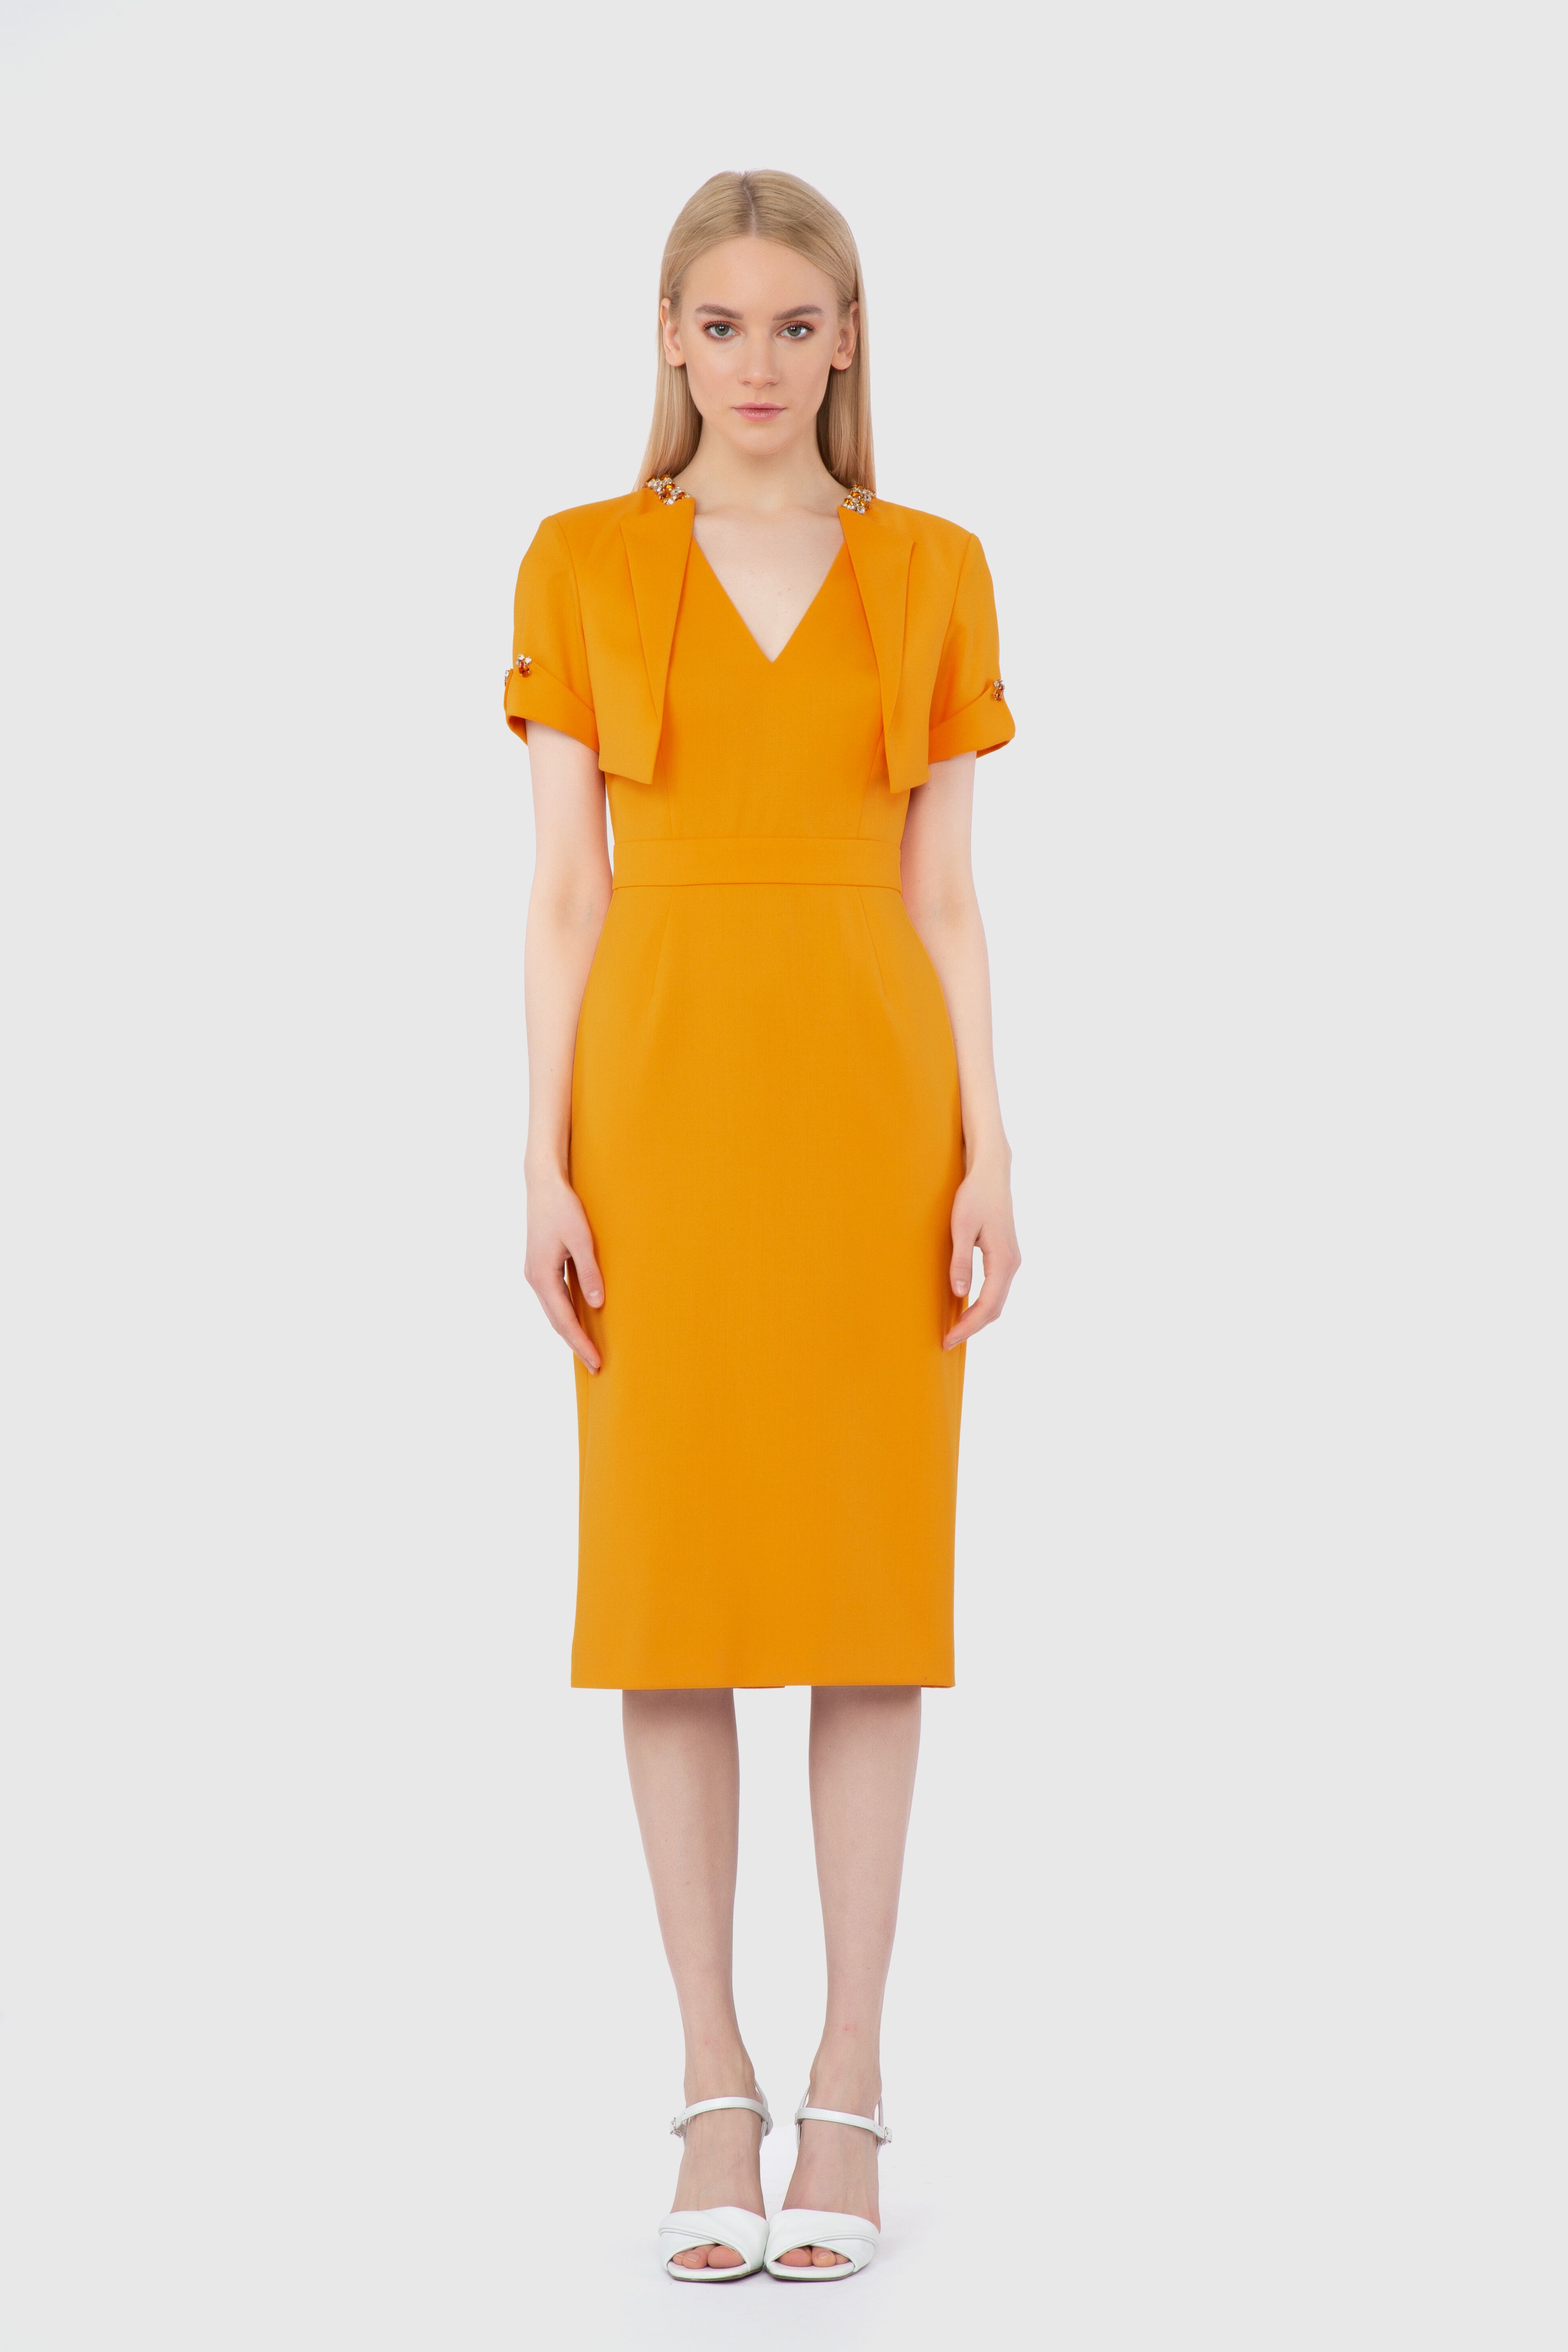 GIZIA - Embroidered Collar Detailed Midi Length Orange Dress